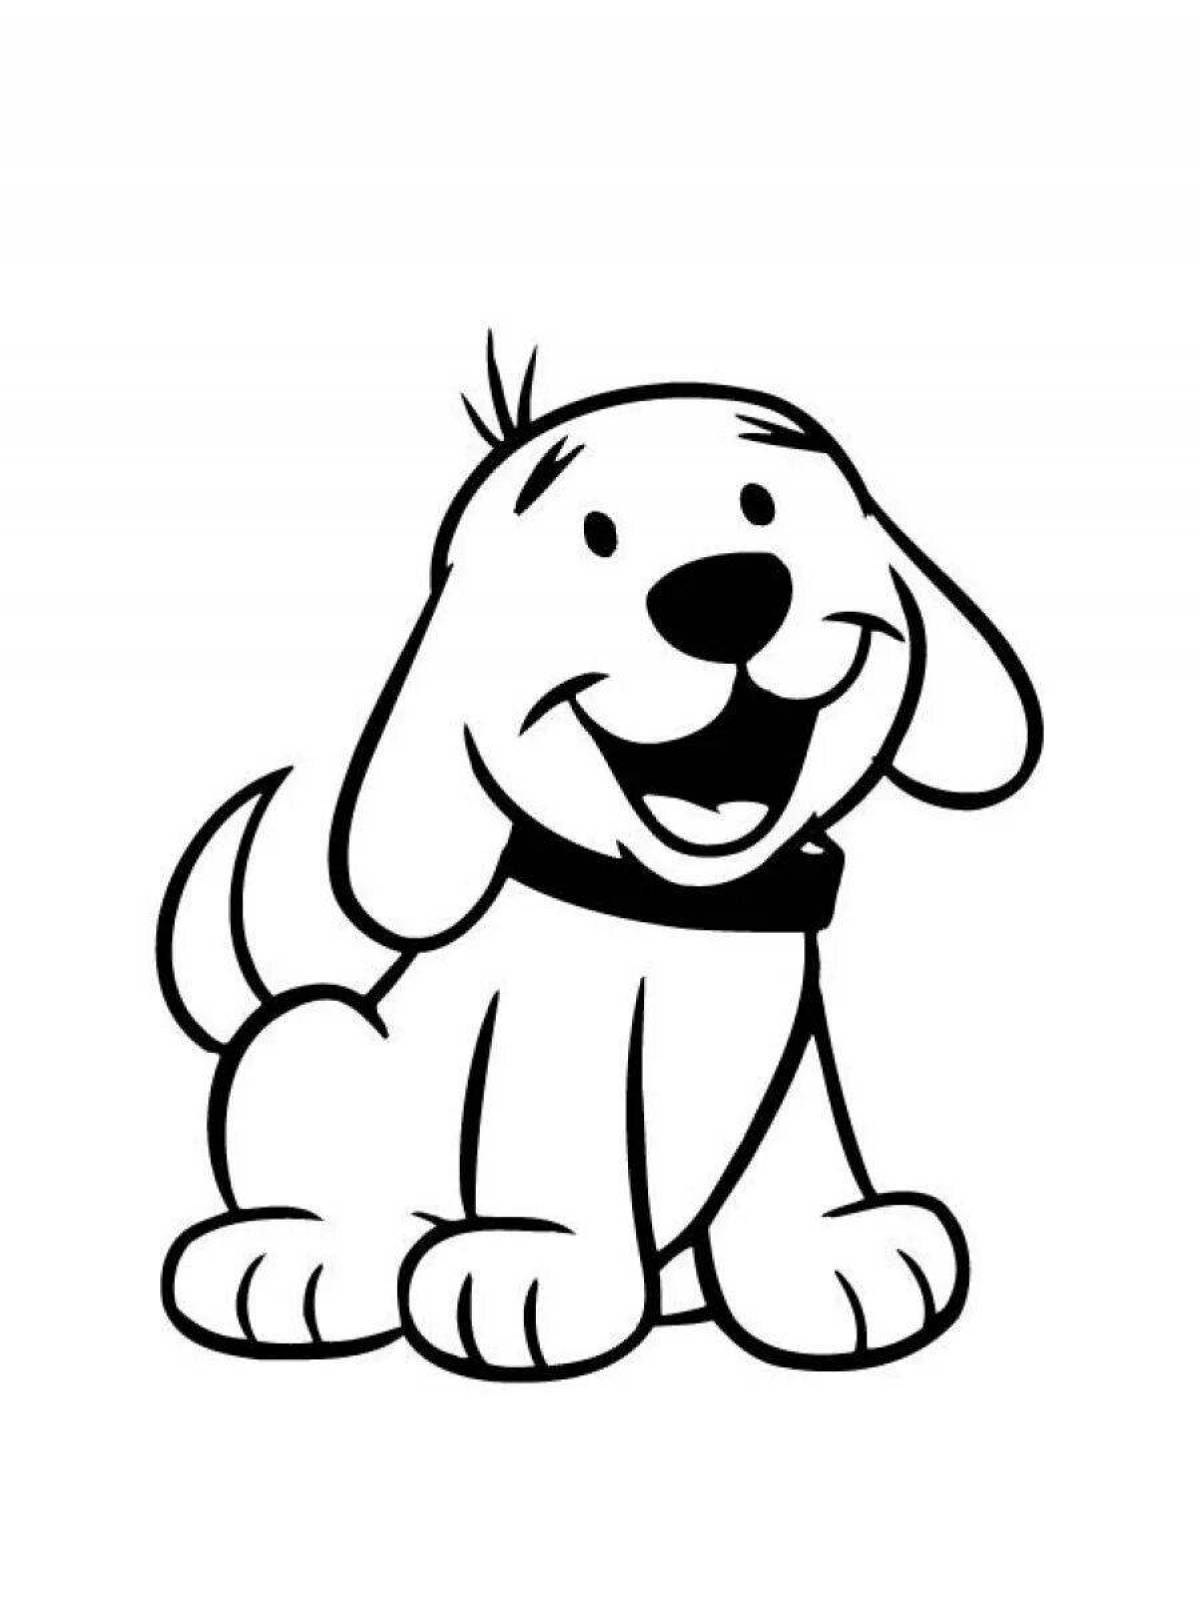 Fun cartoon dog coloring book